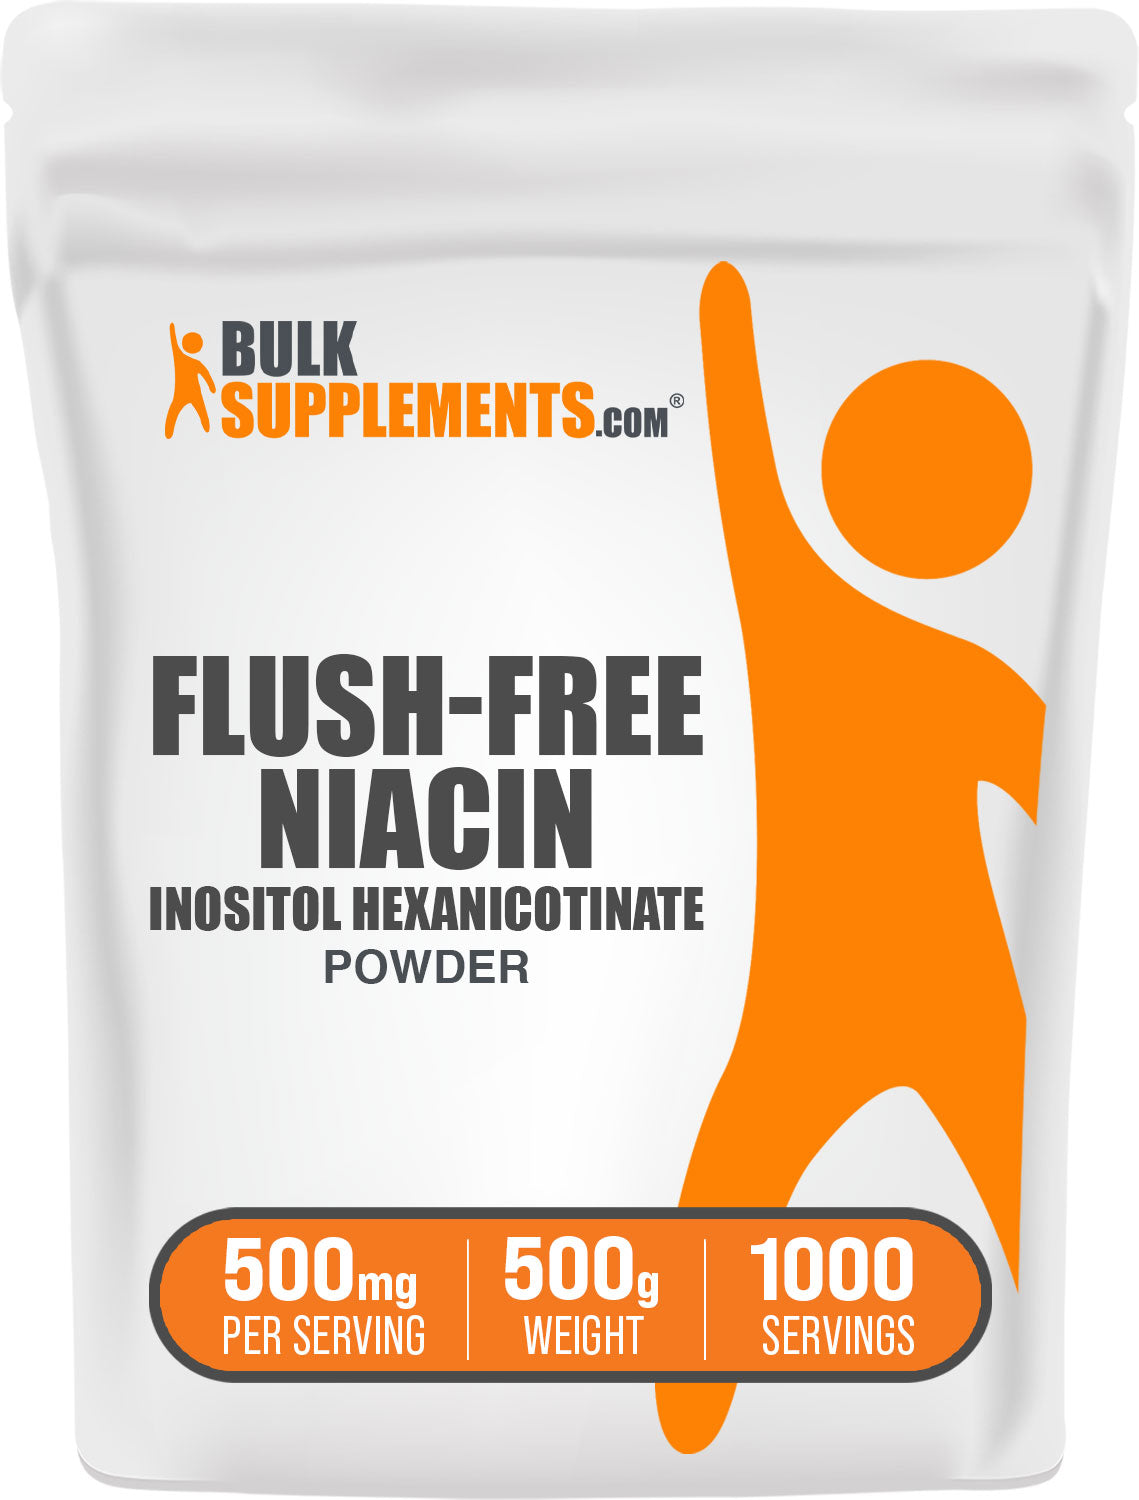 BulkSupplements.com Flush-Free Niacin Powder 500g bag